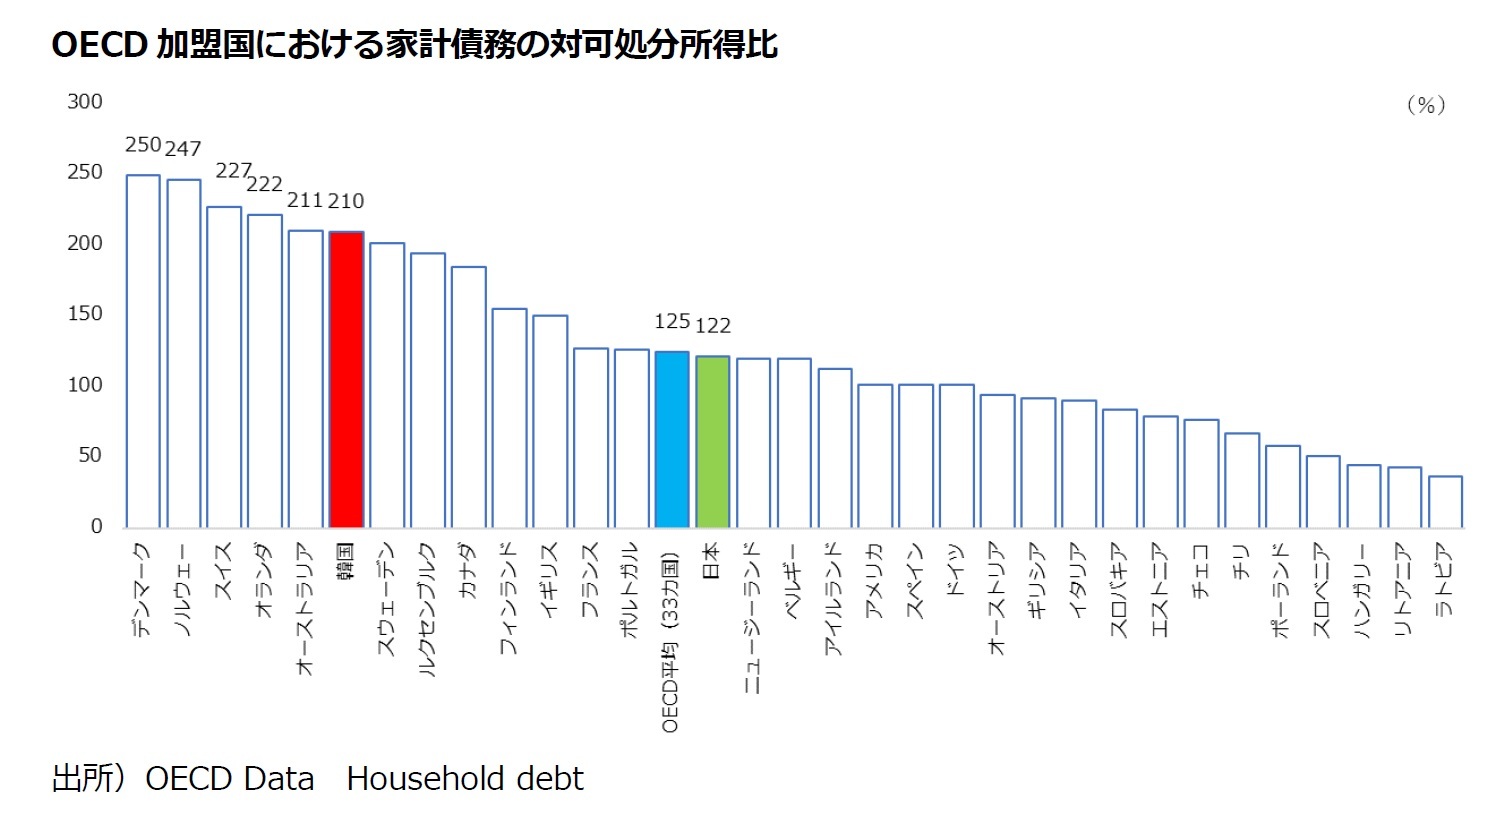 OECD加盟国における家計債務の対可処分所得比